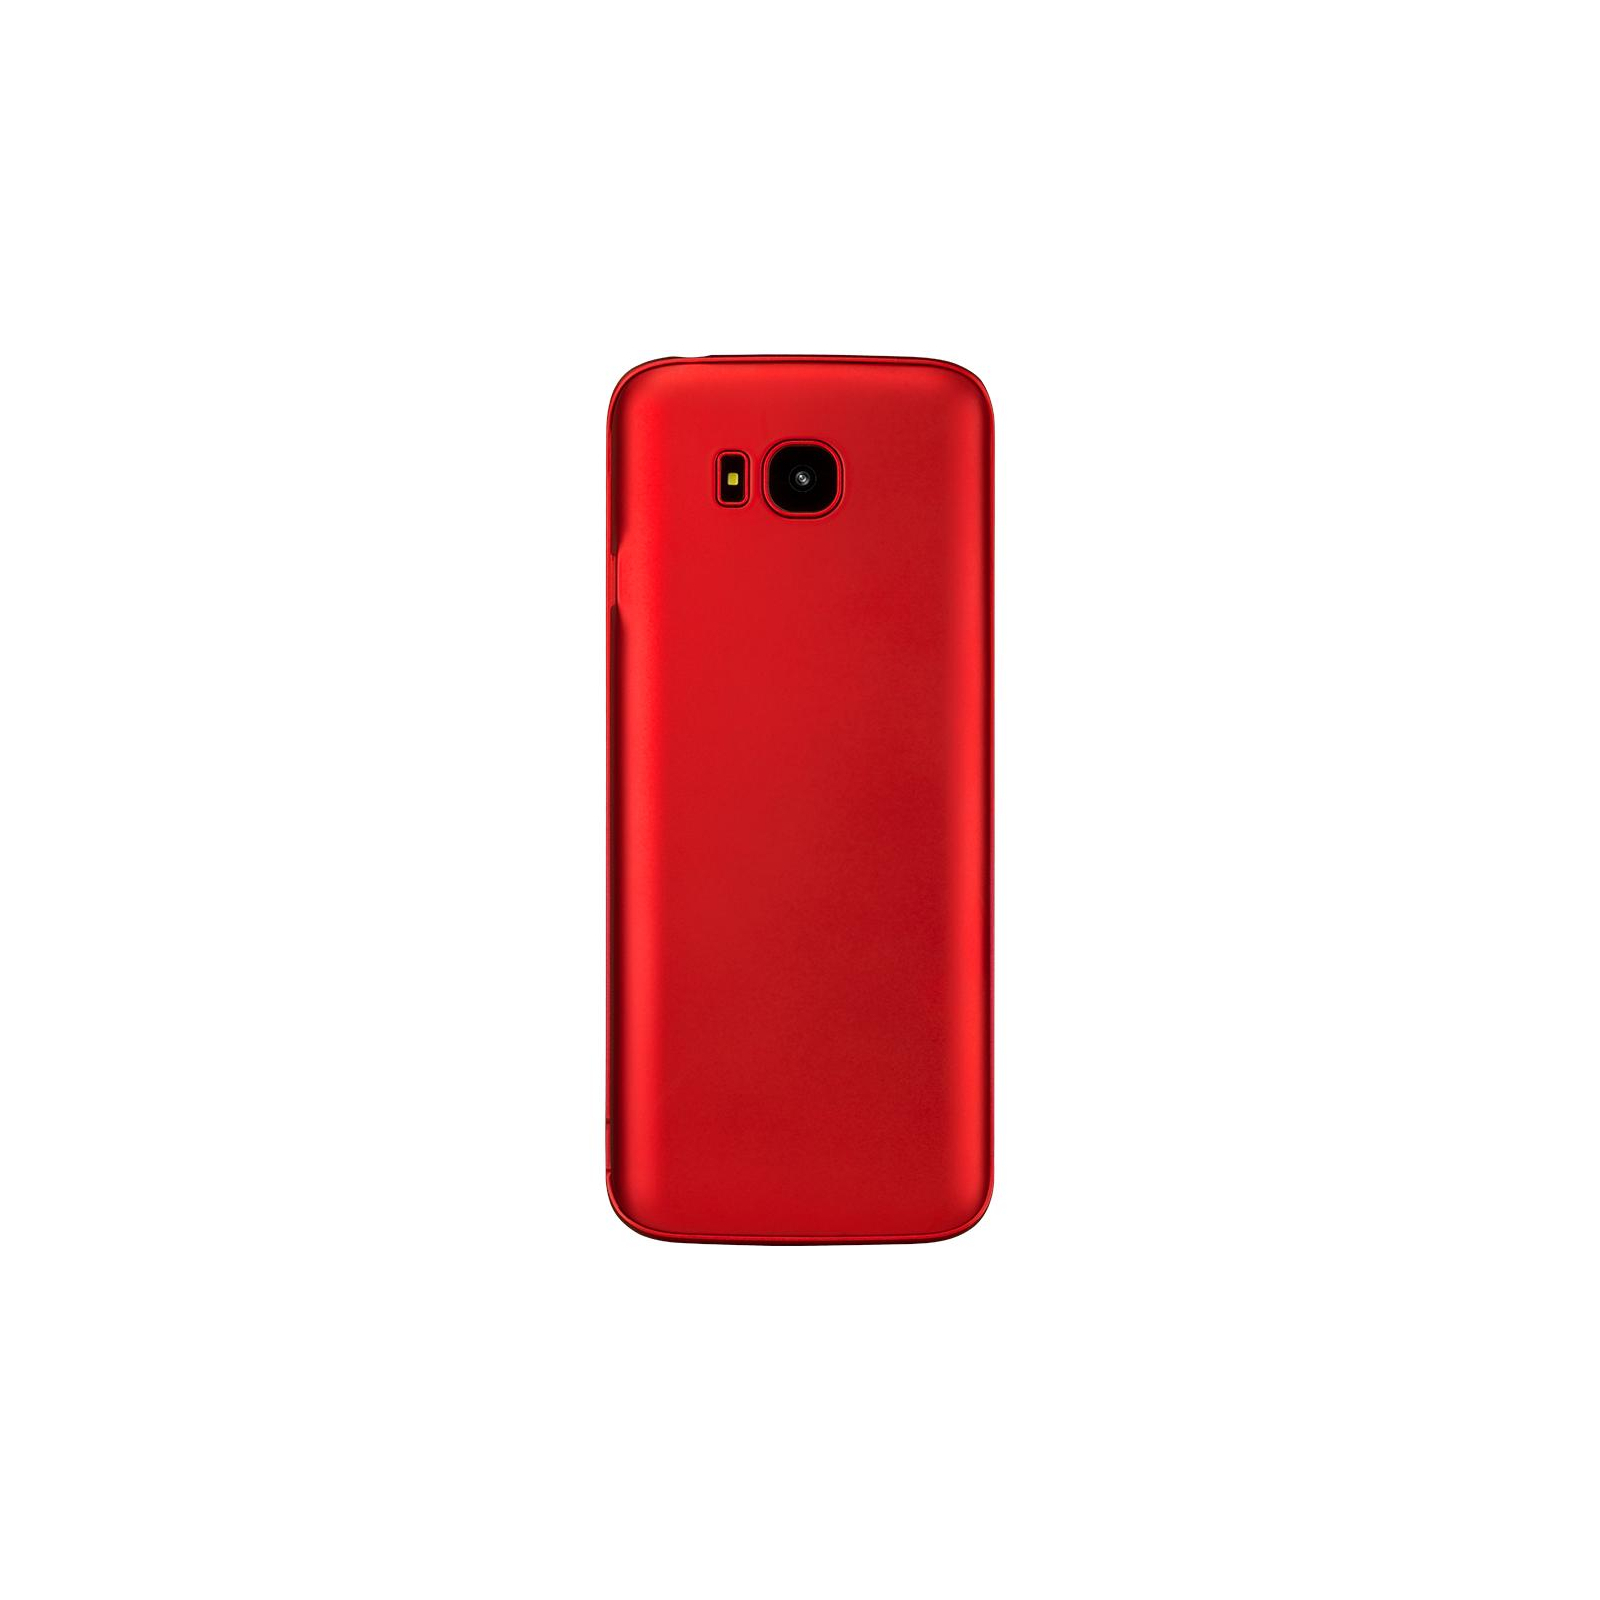 Мобильный телефон Prestigio 1281 Duo Red (PFP1281DUORED) изображение 2